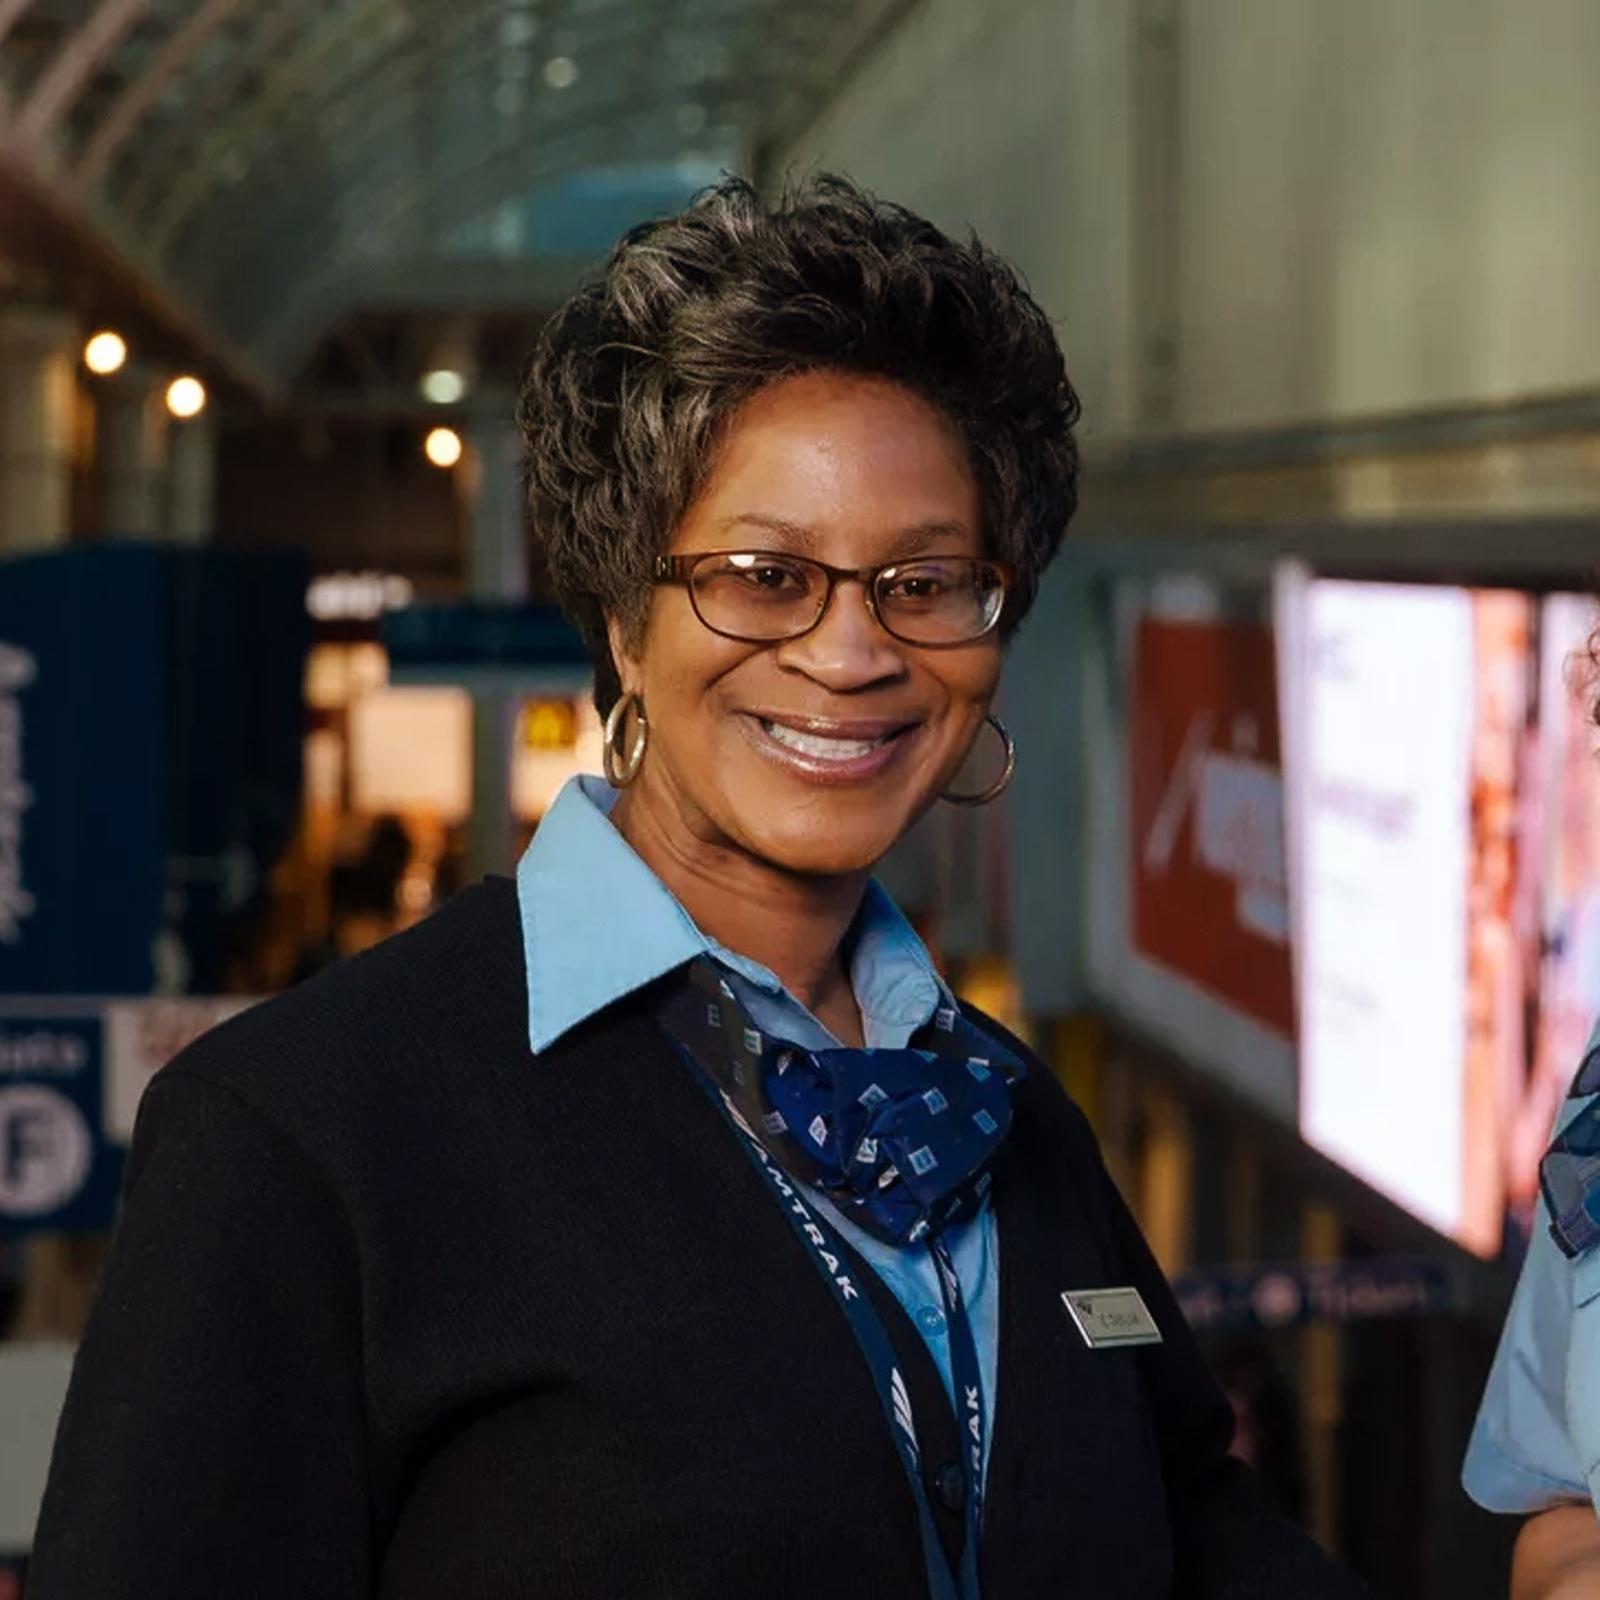 An Amtrak employee smiling